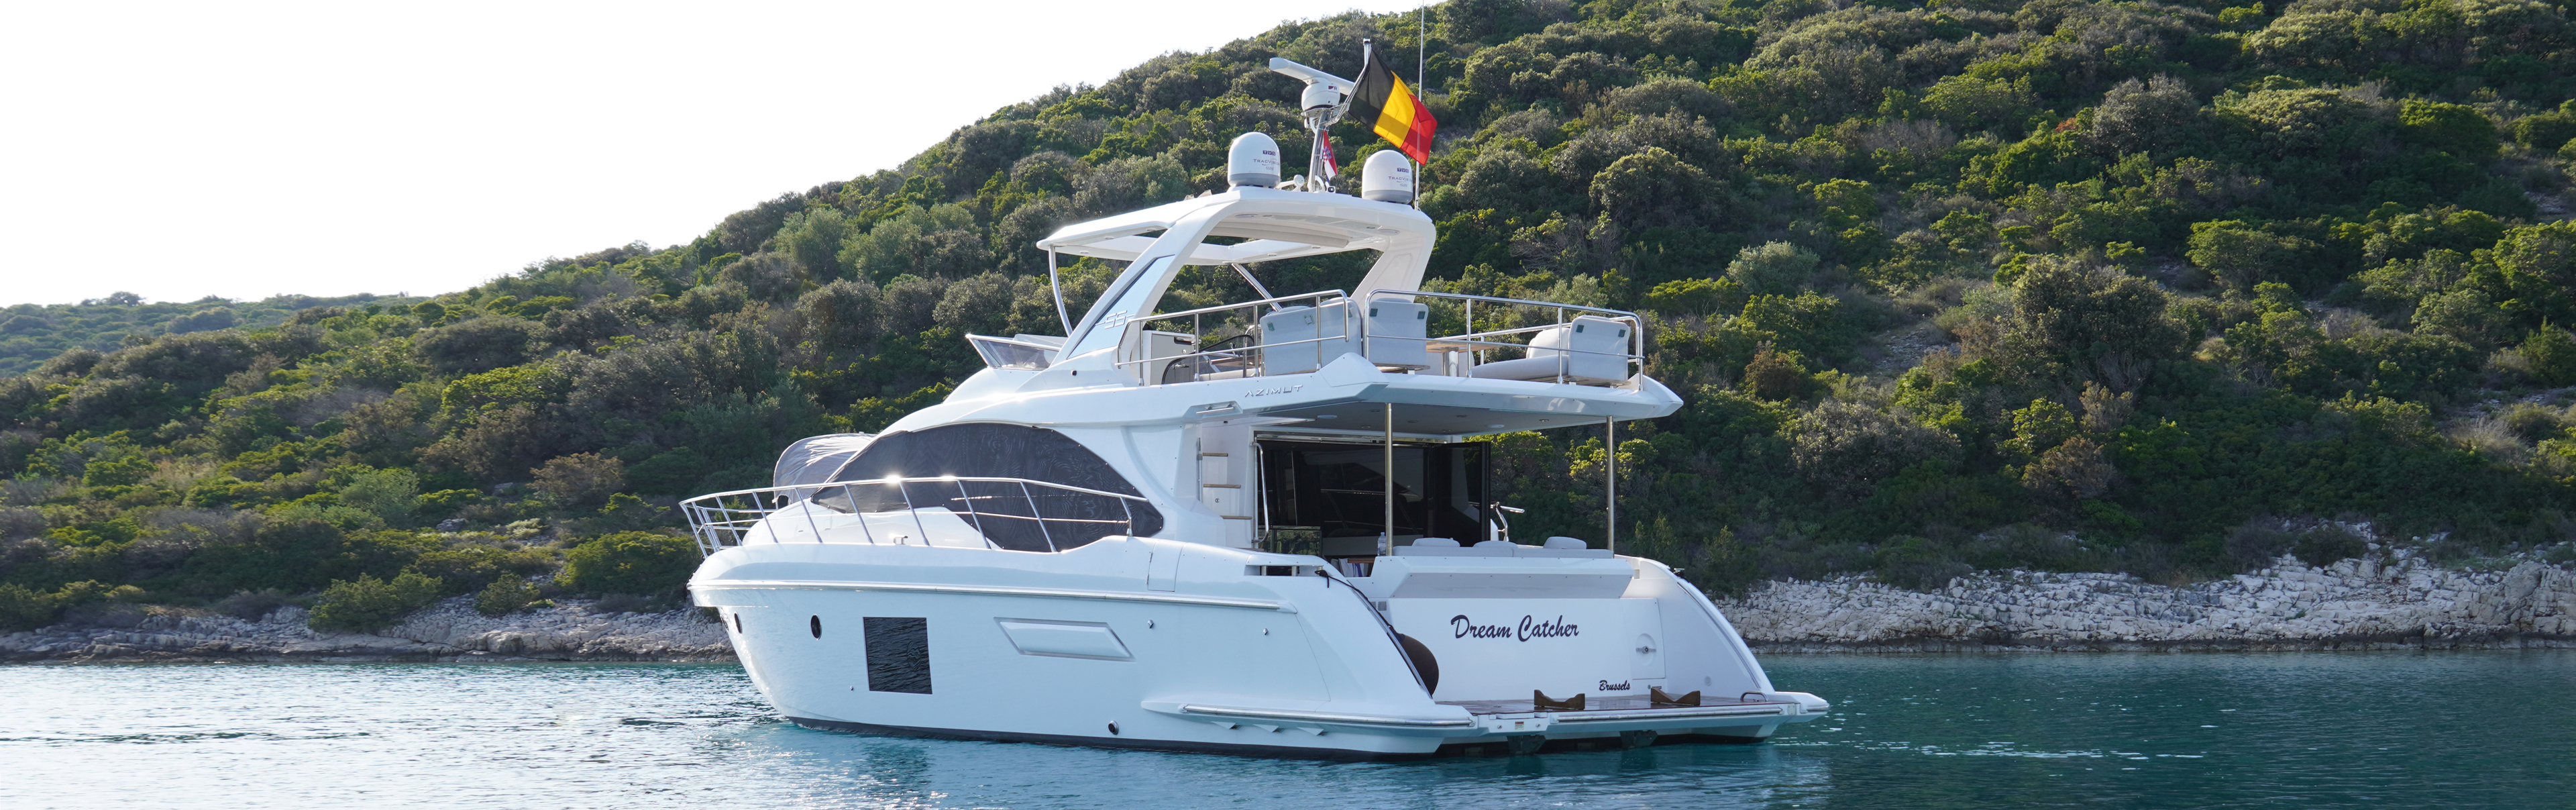 Azimut 55 Fly Dream Catcher - AB Yacht Charter Belgium